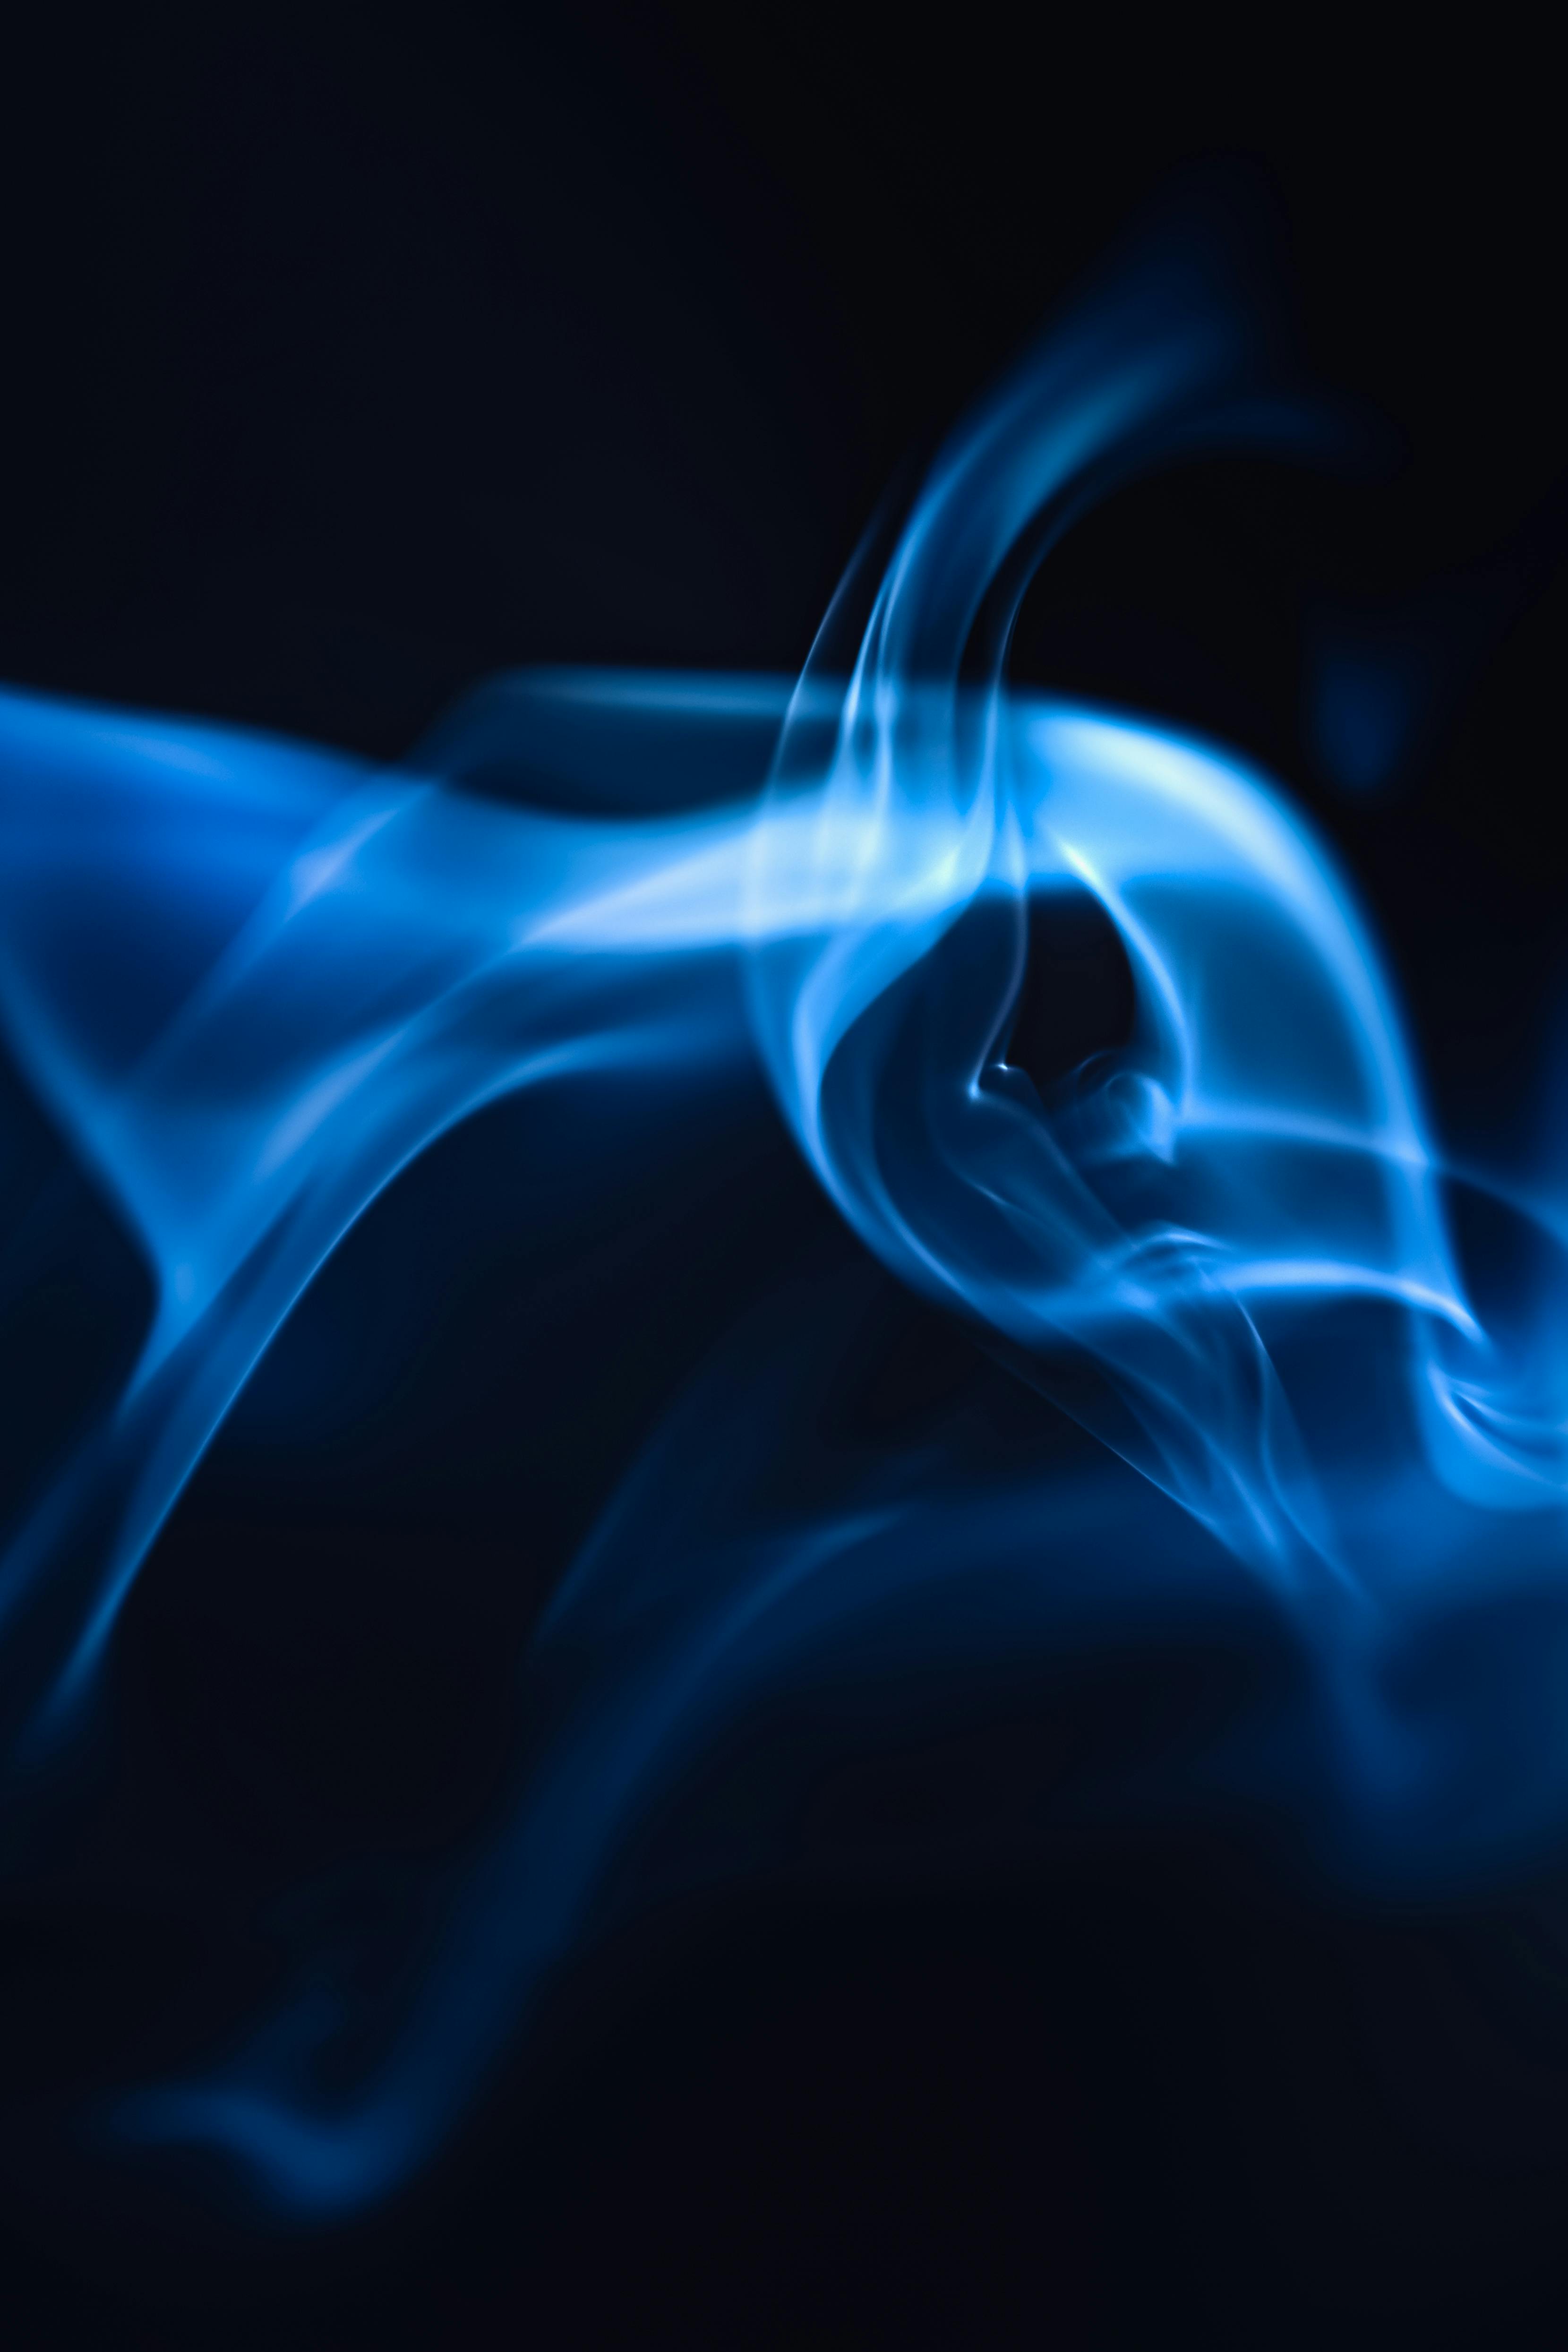 Blue and White Smoke Background · Free Stock Photo